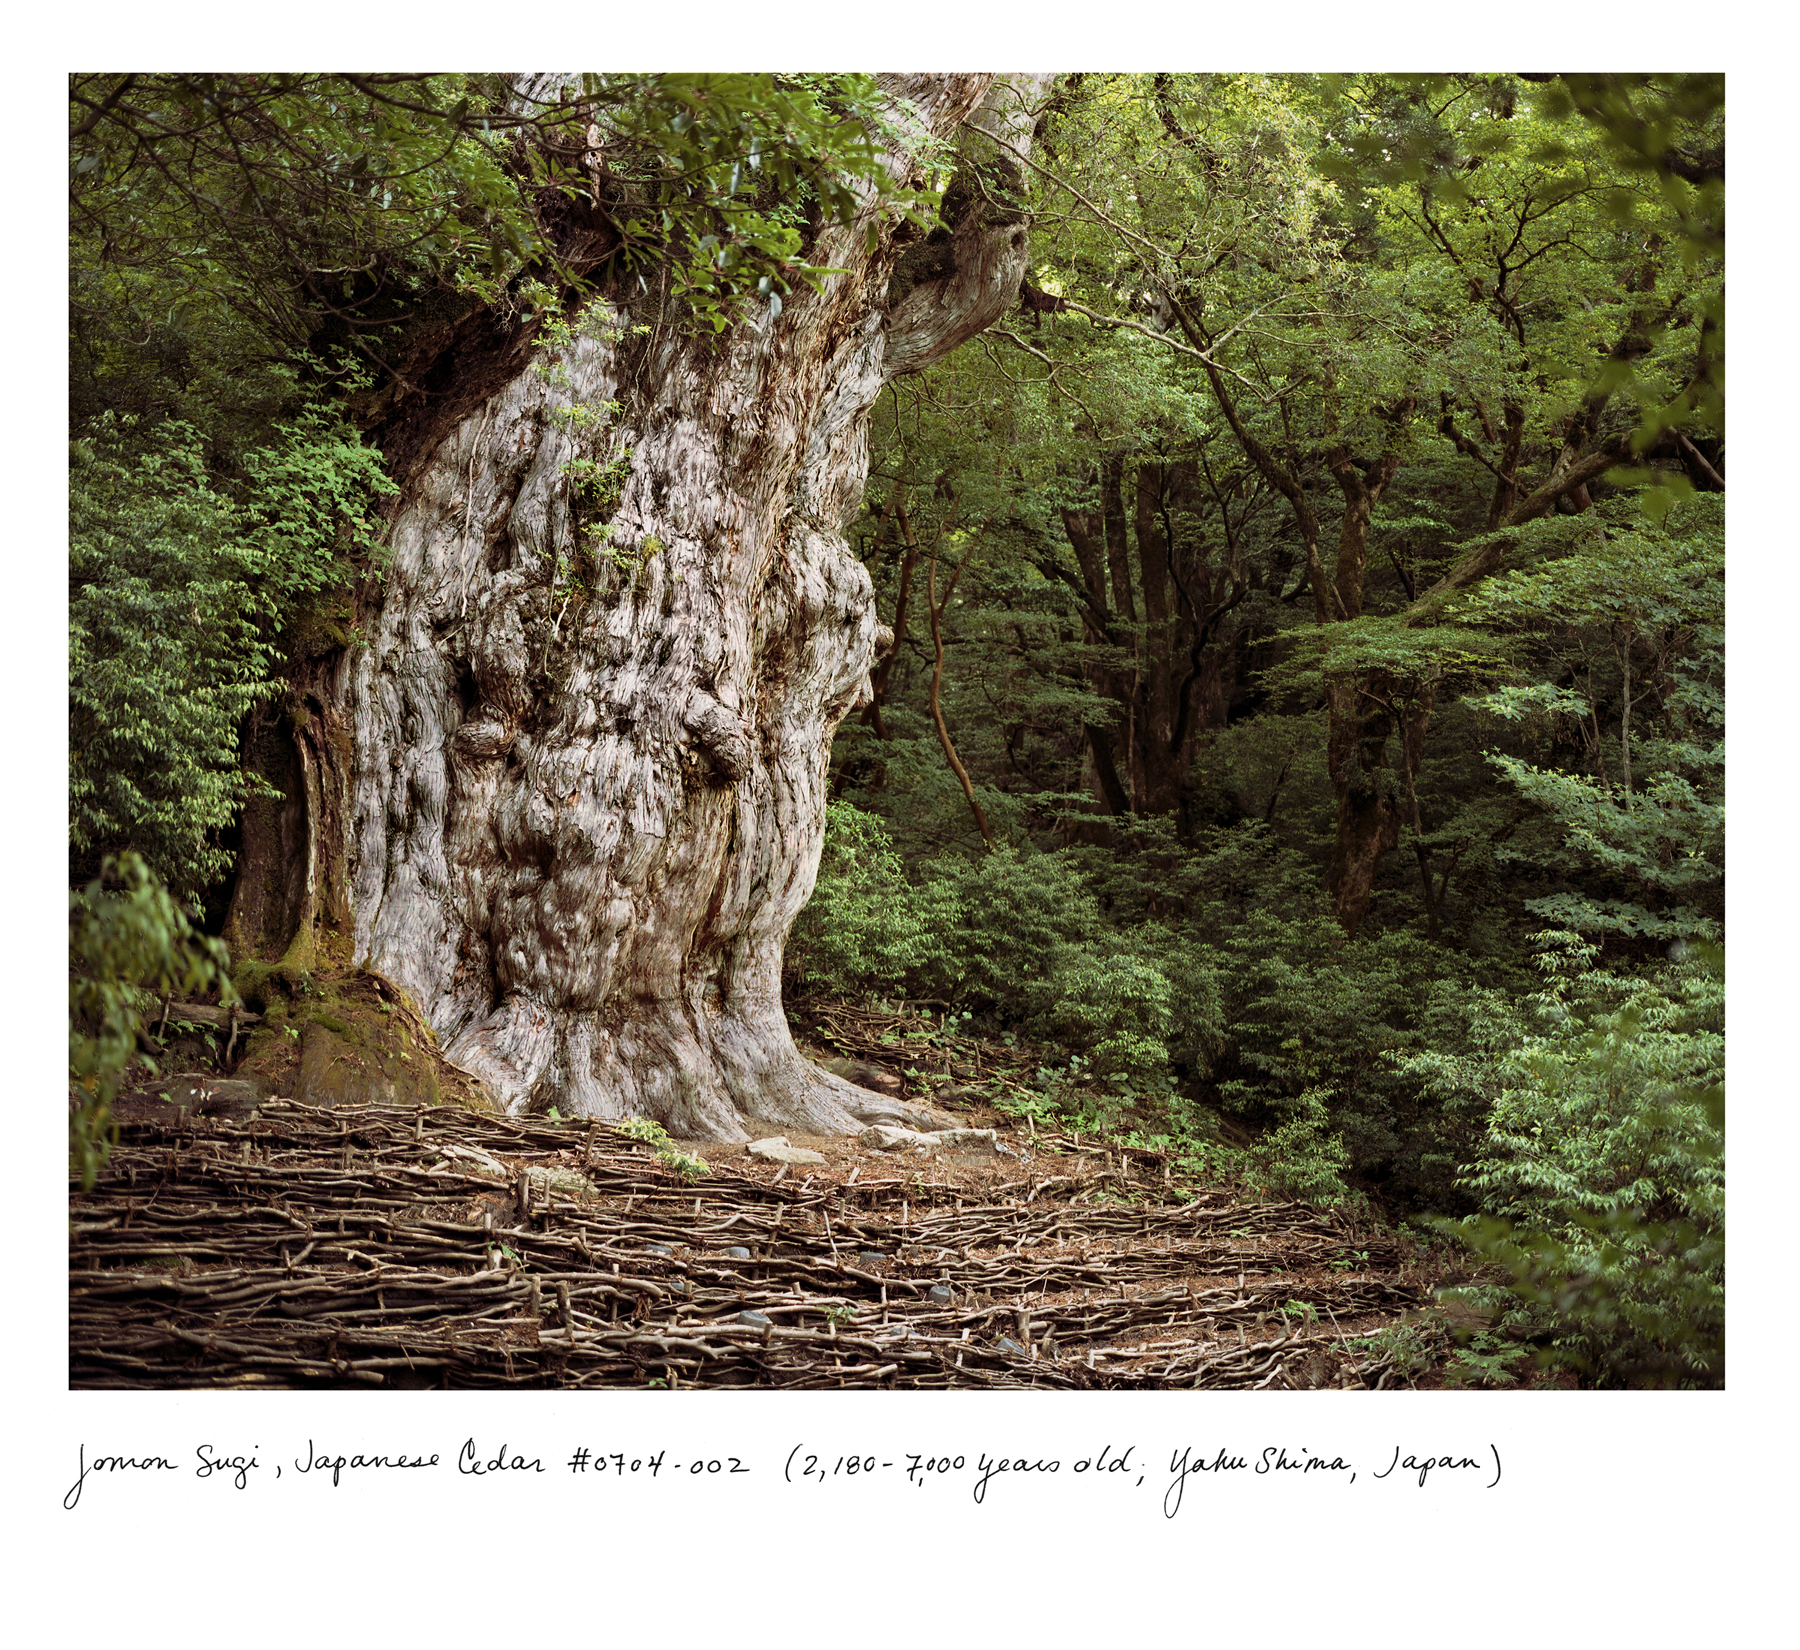 Image of a Joman Sugi tree (Japanese Cedar)